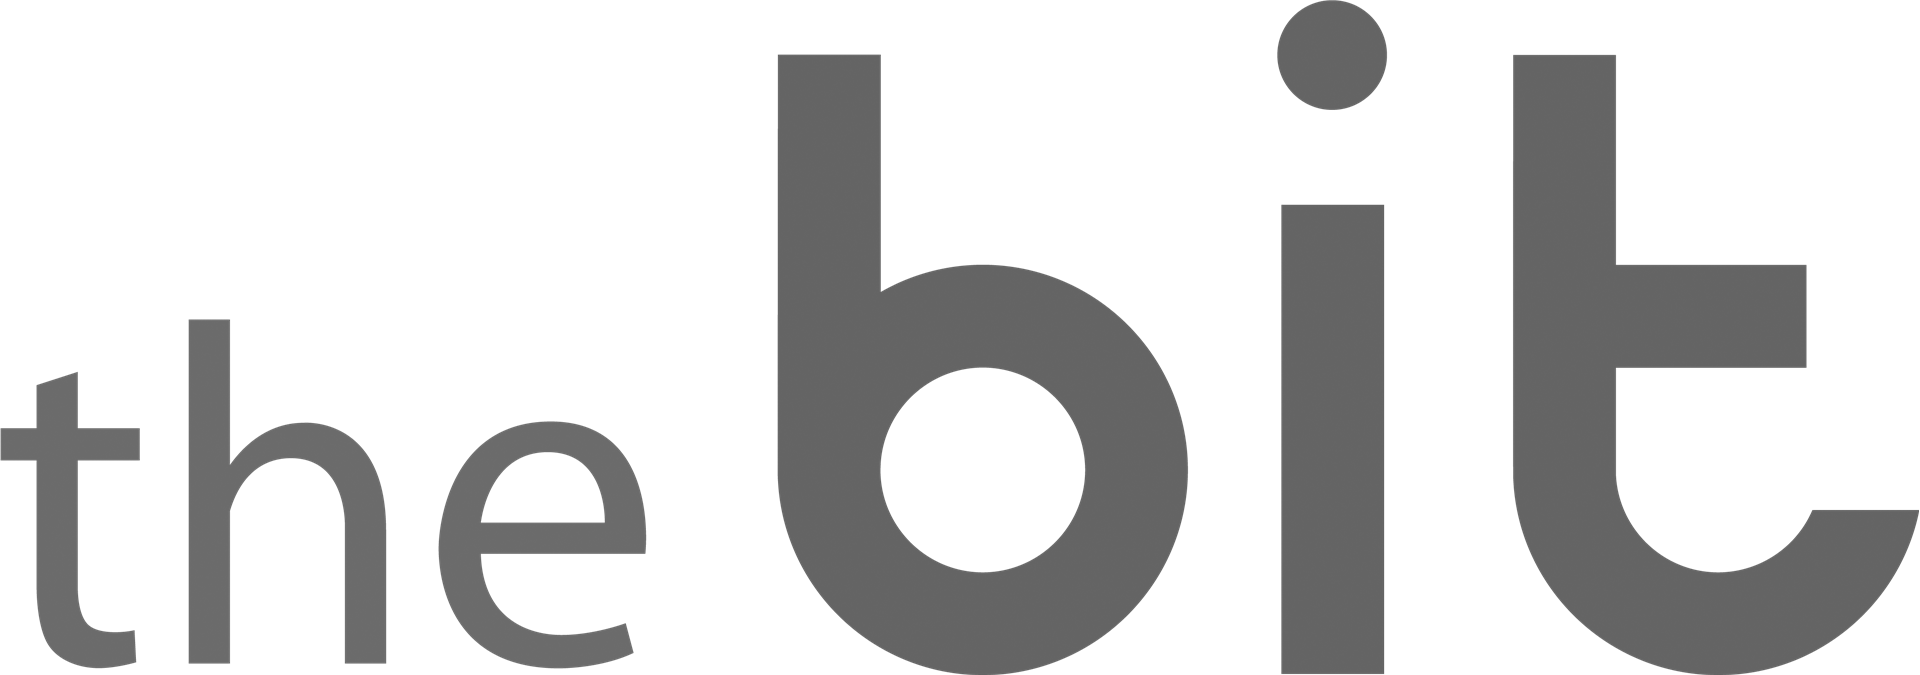 The Bit logo bw